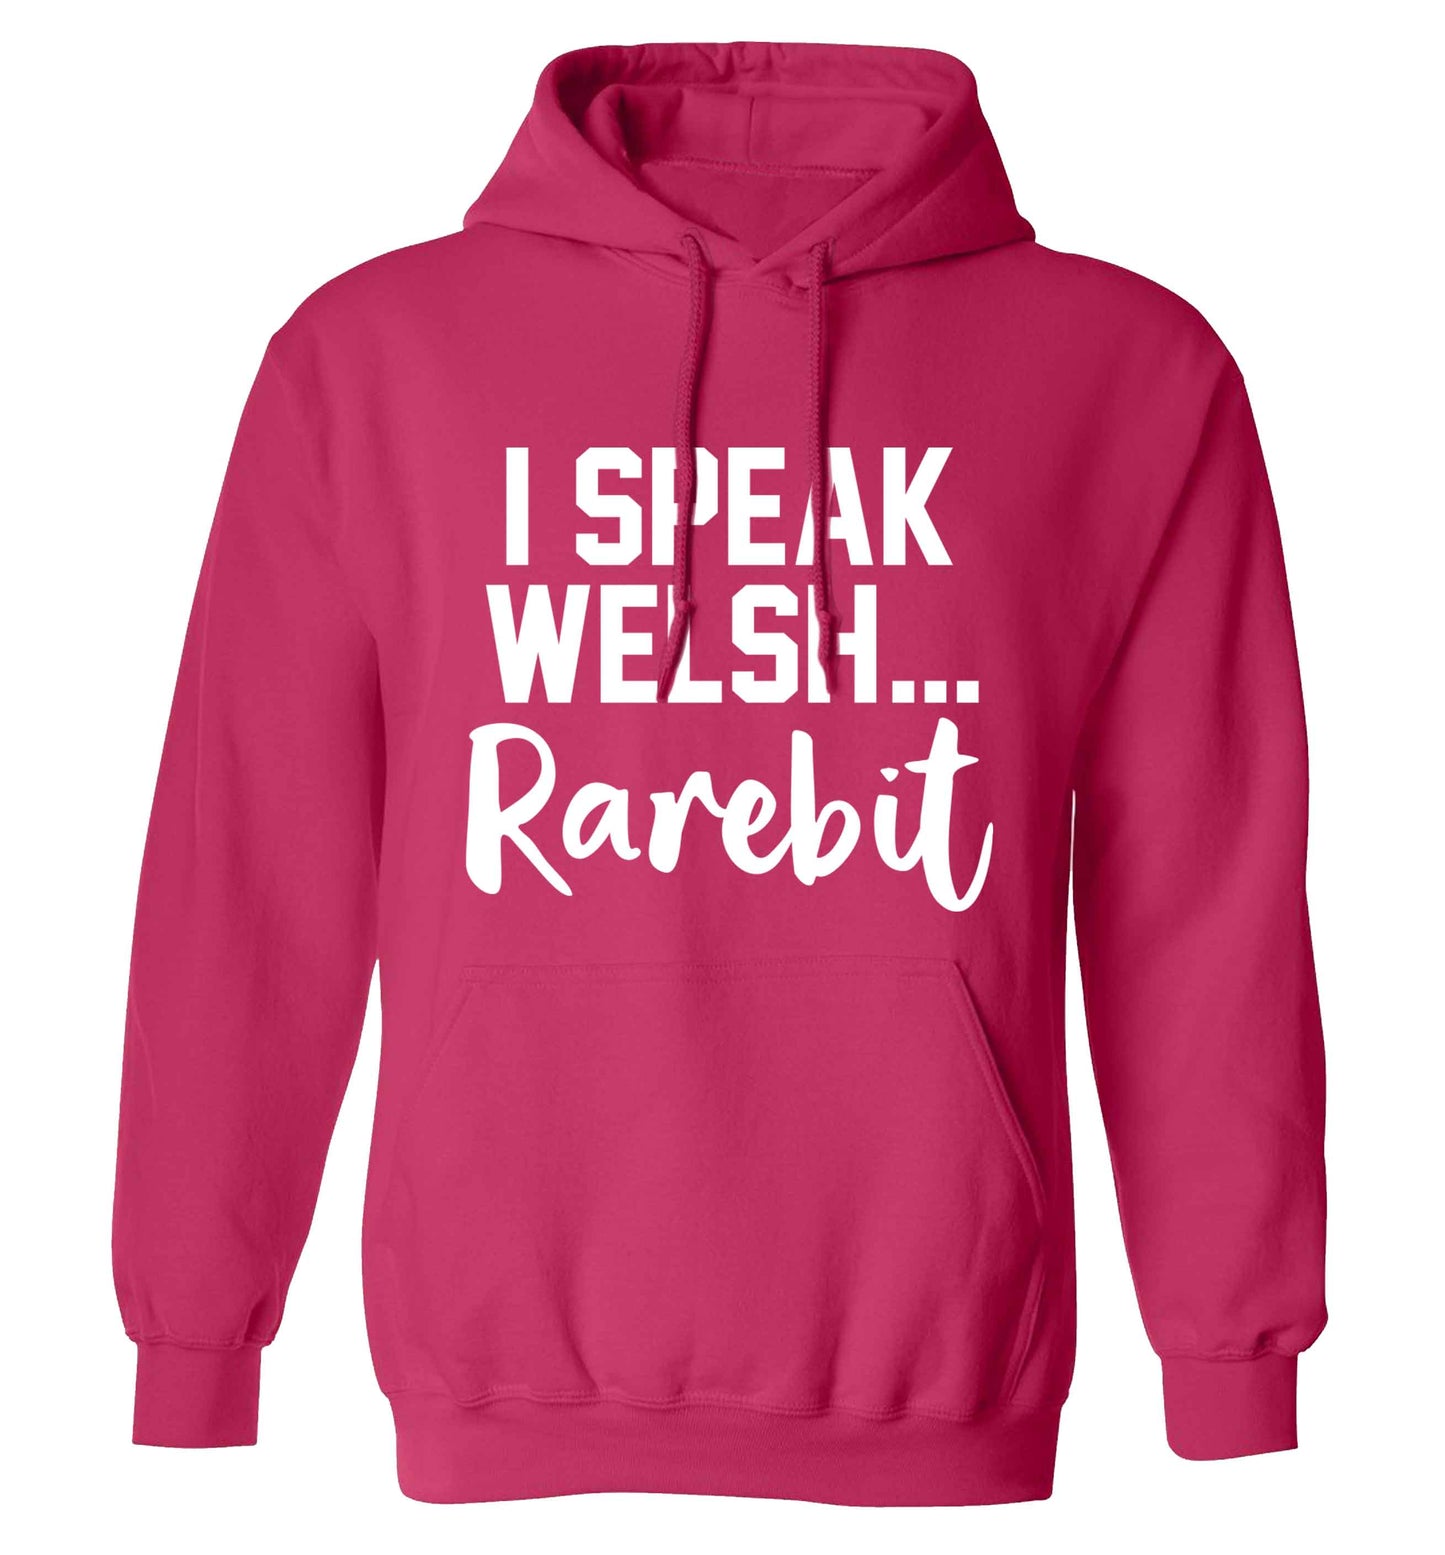 I speak Welsh...rarebit adults unisex pink hoodie 2XL